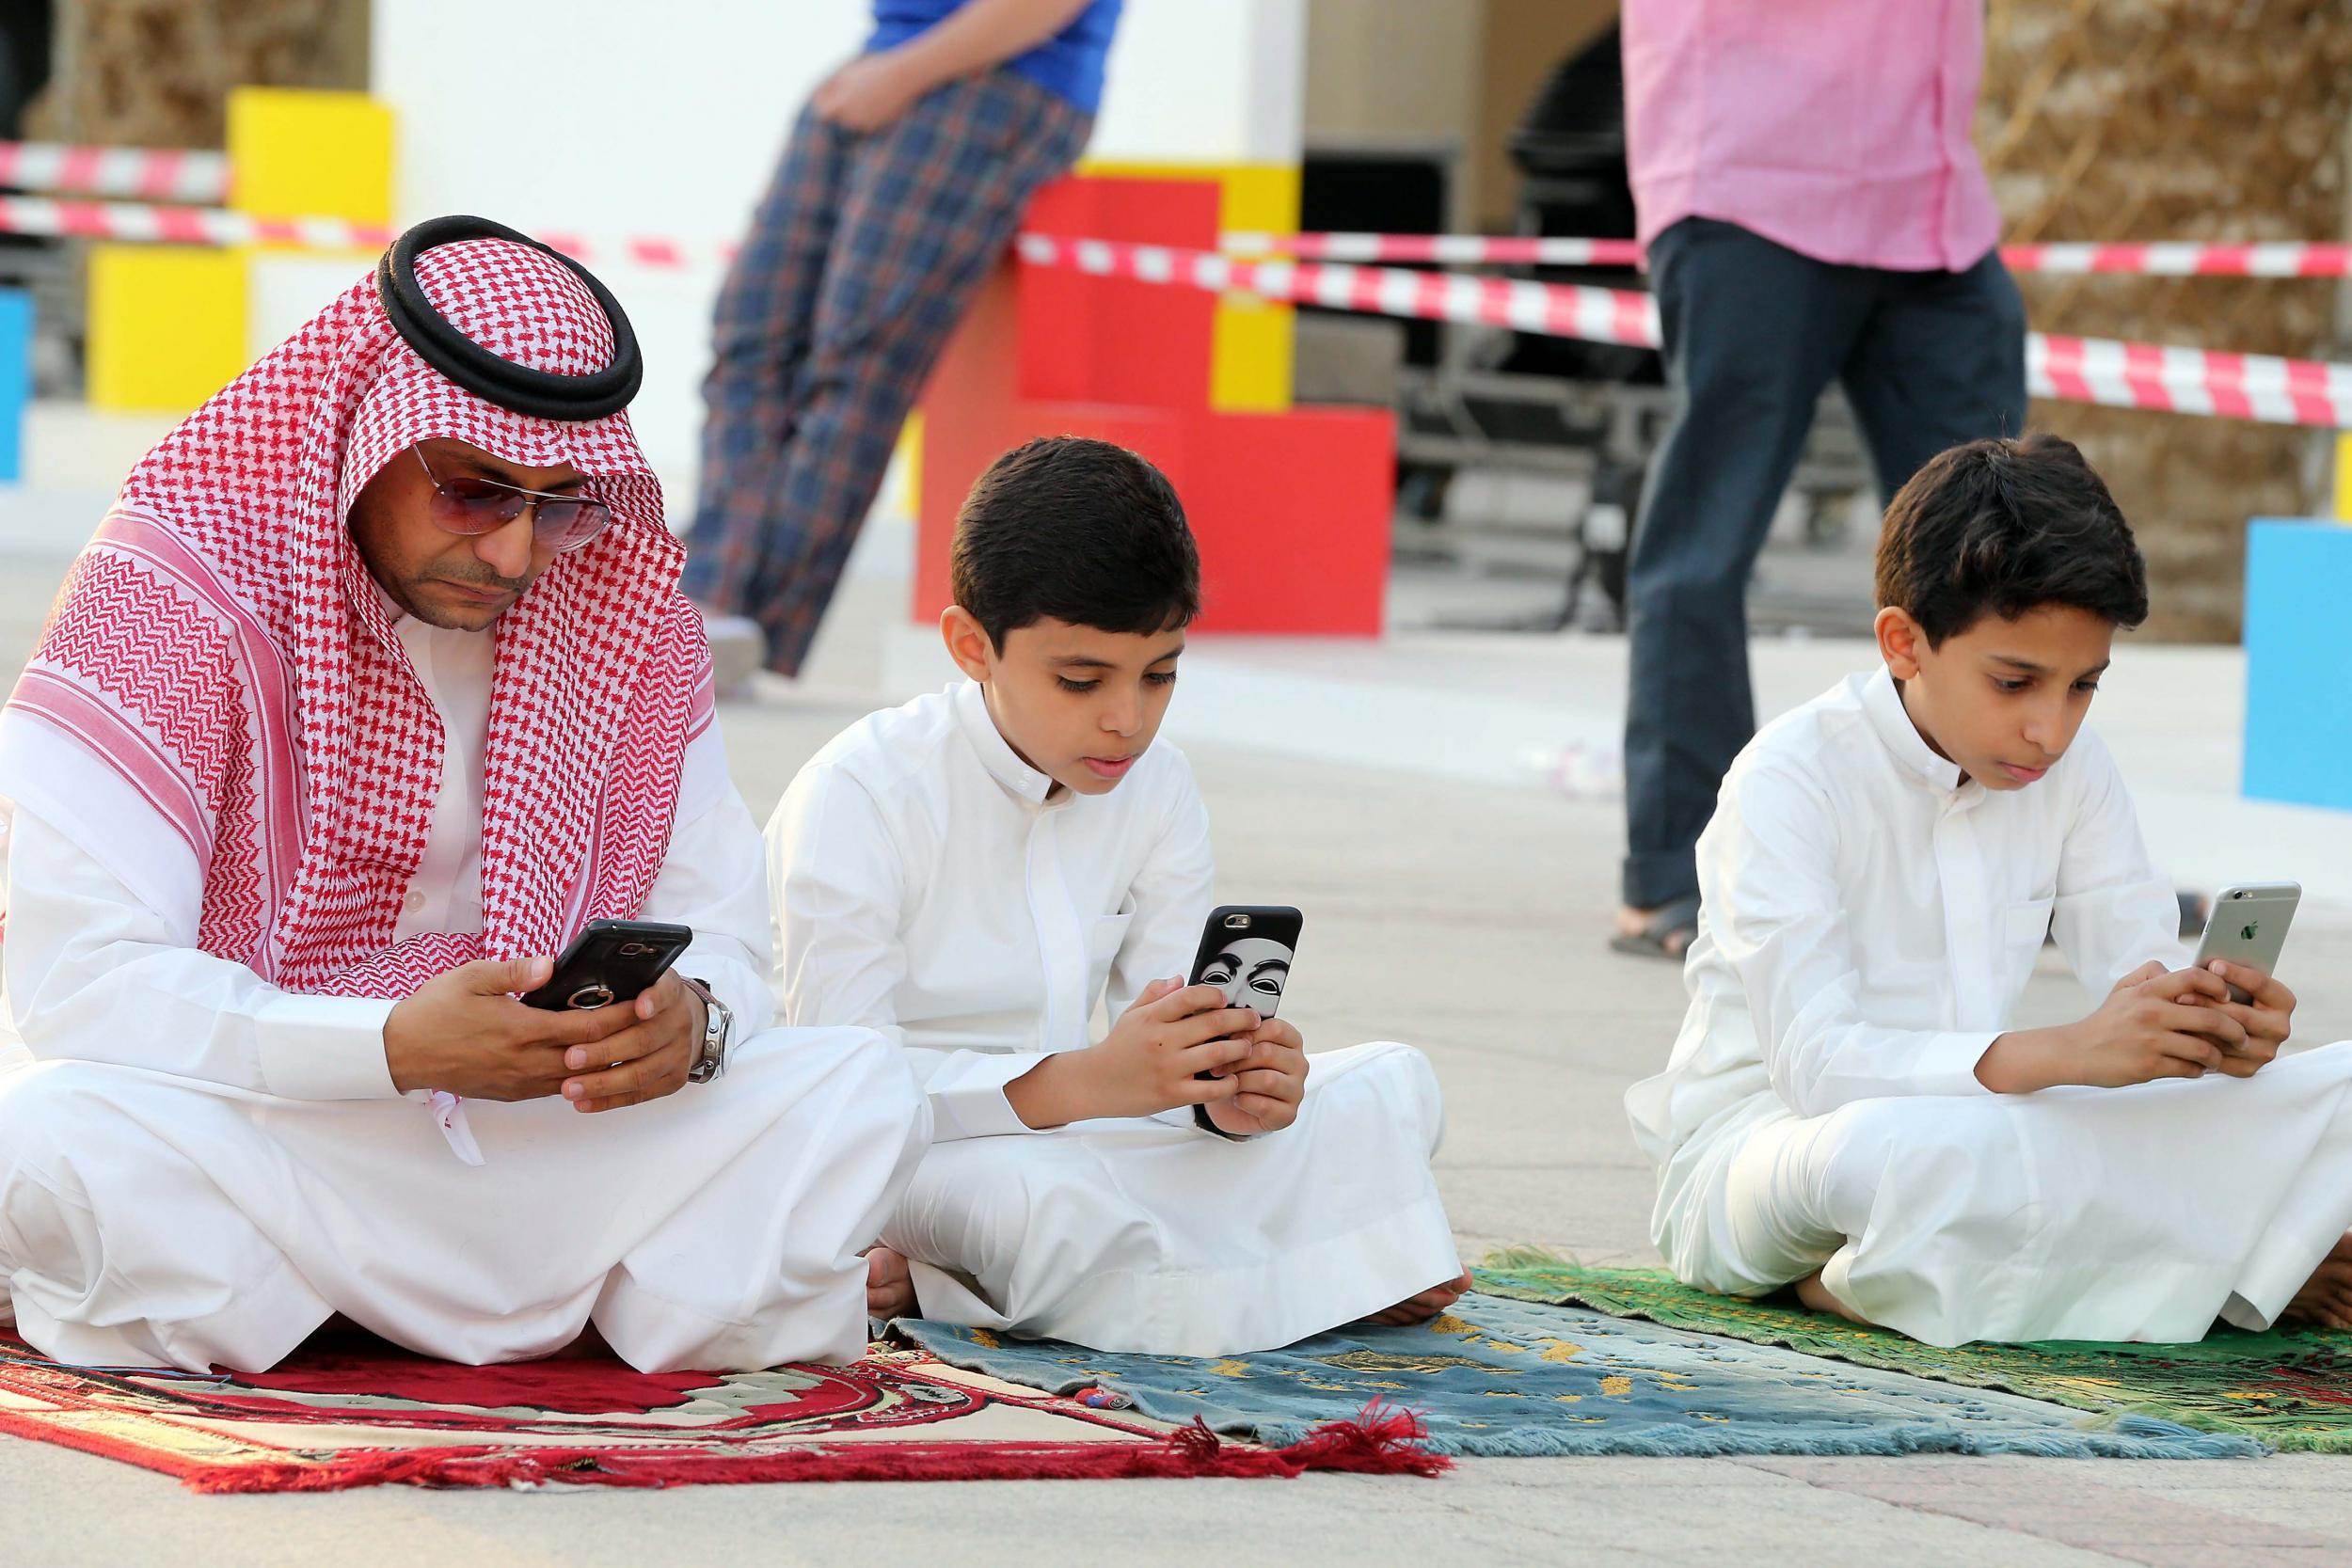 Saudis and foreigners perform prayer at the al-Masmak grand mosque of Prince Turki bin Abdulla palace in Riyadh